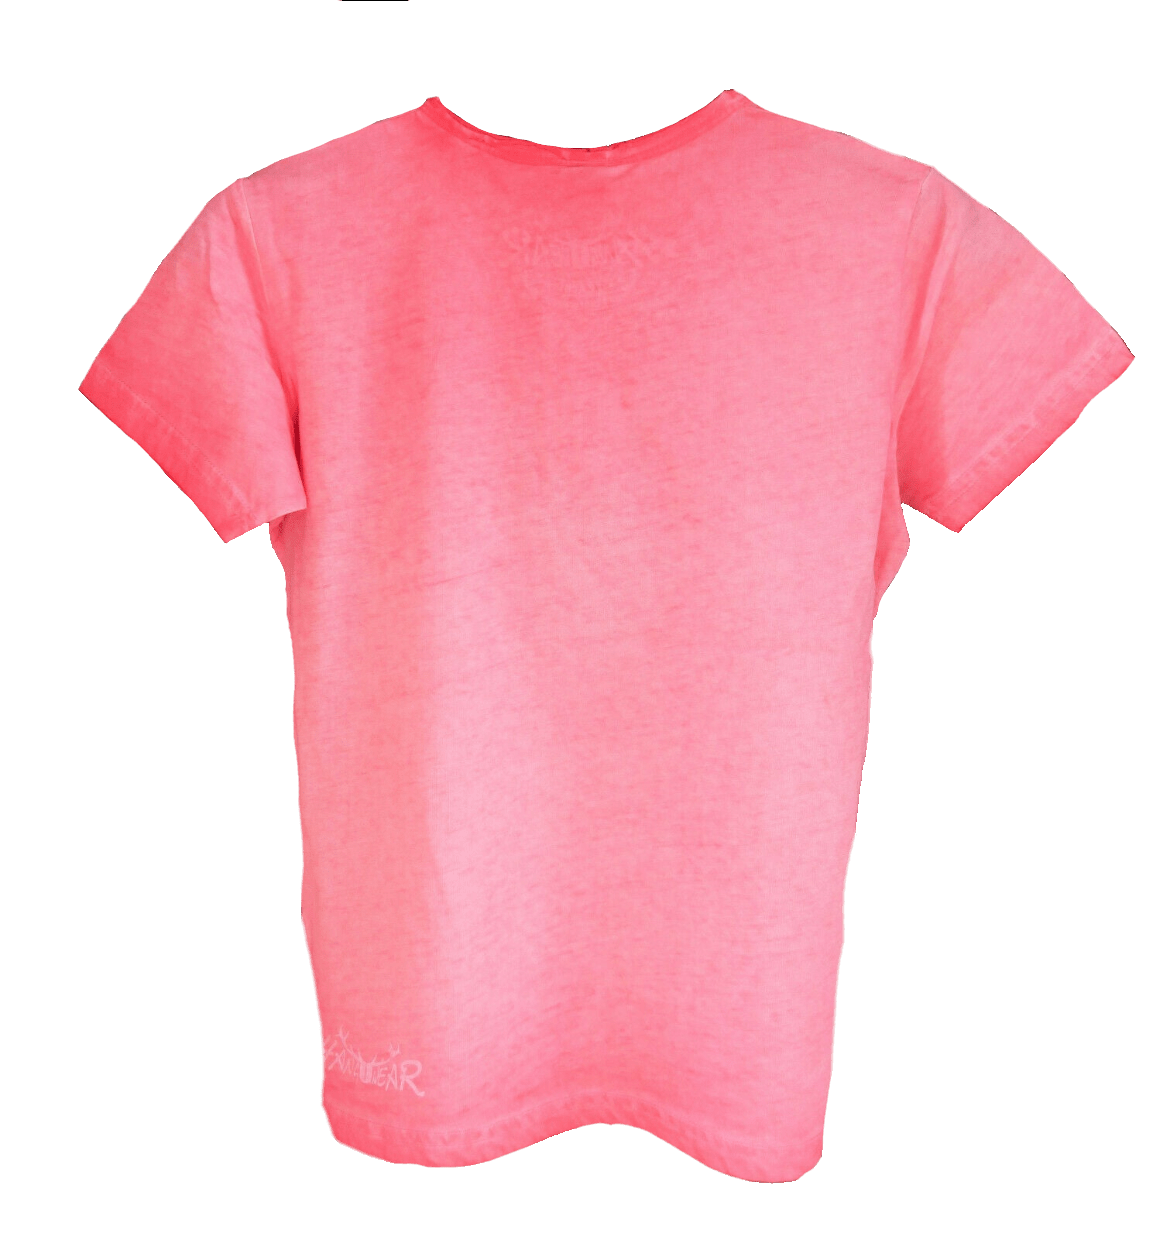 Kinder Madlshirt, HangOwear, Rike, Pink, rot, Herz, AR Kindershirt HangOwear 